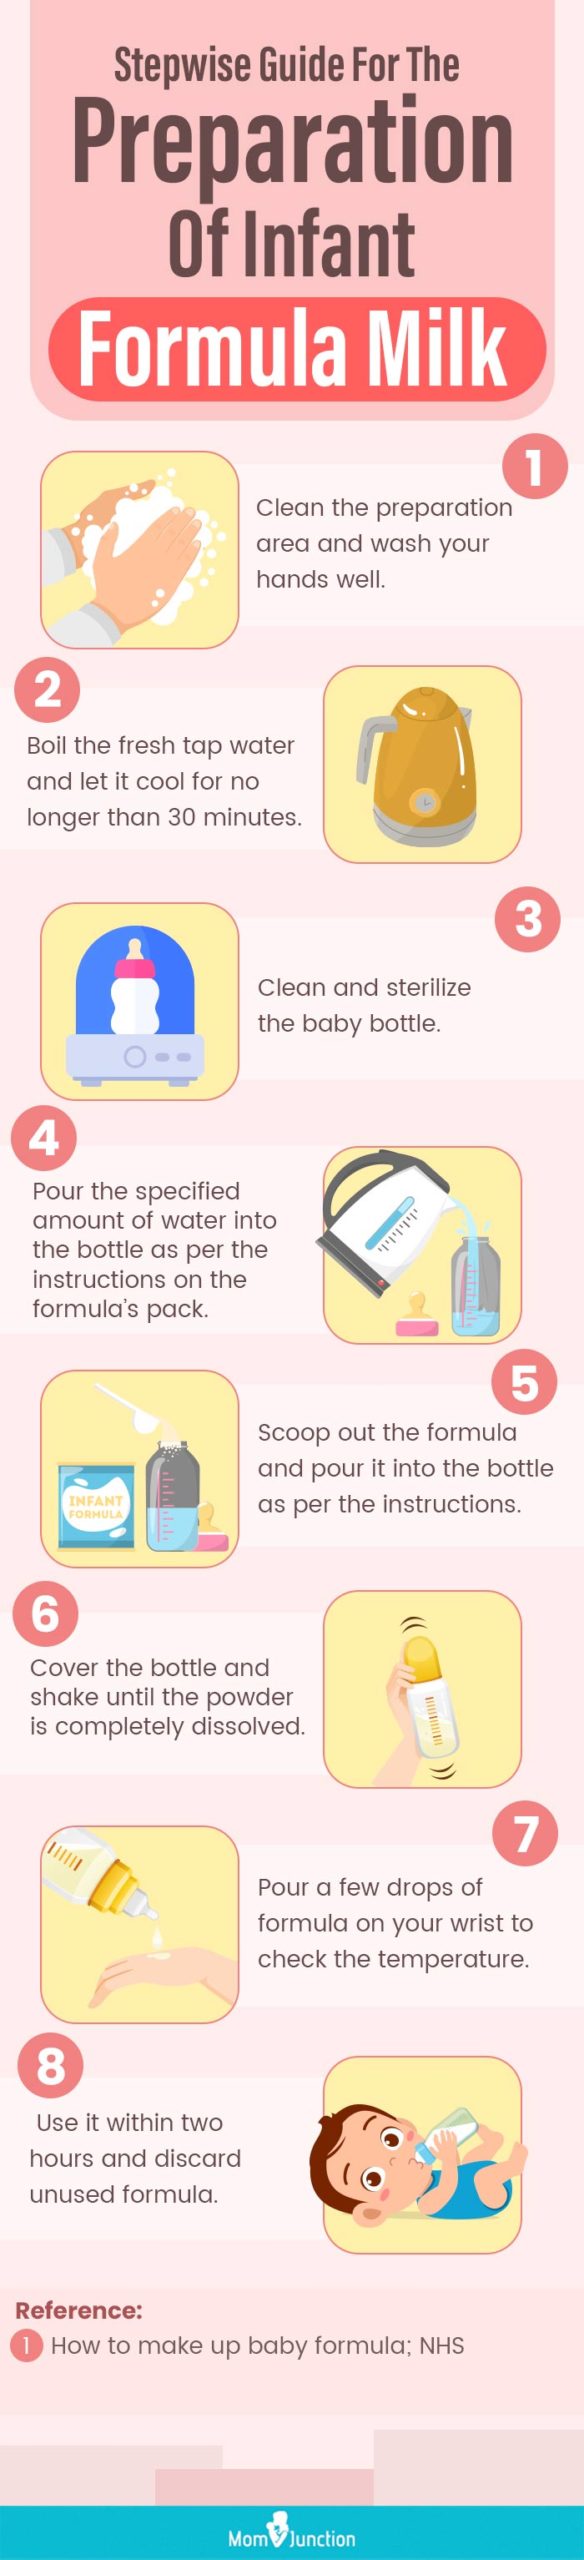 How to prepare Formula Milk